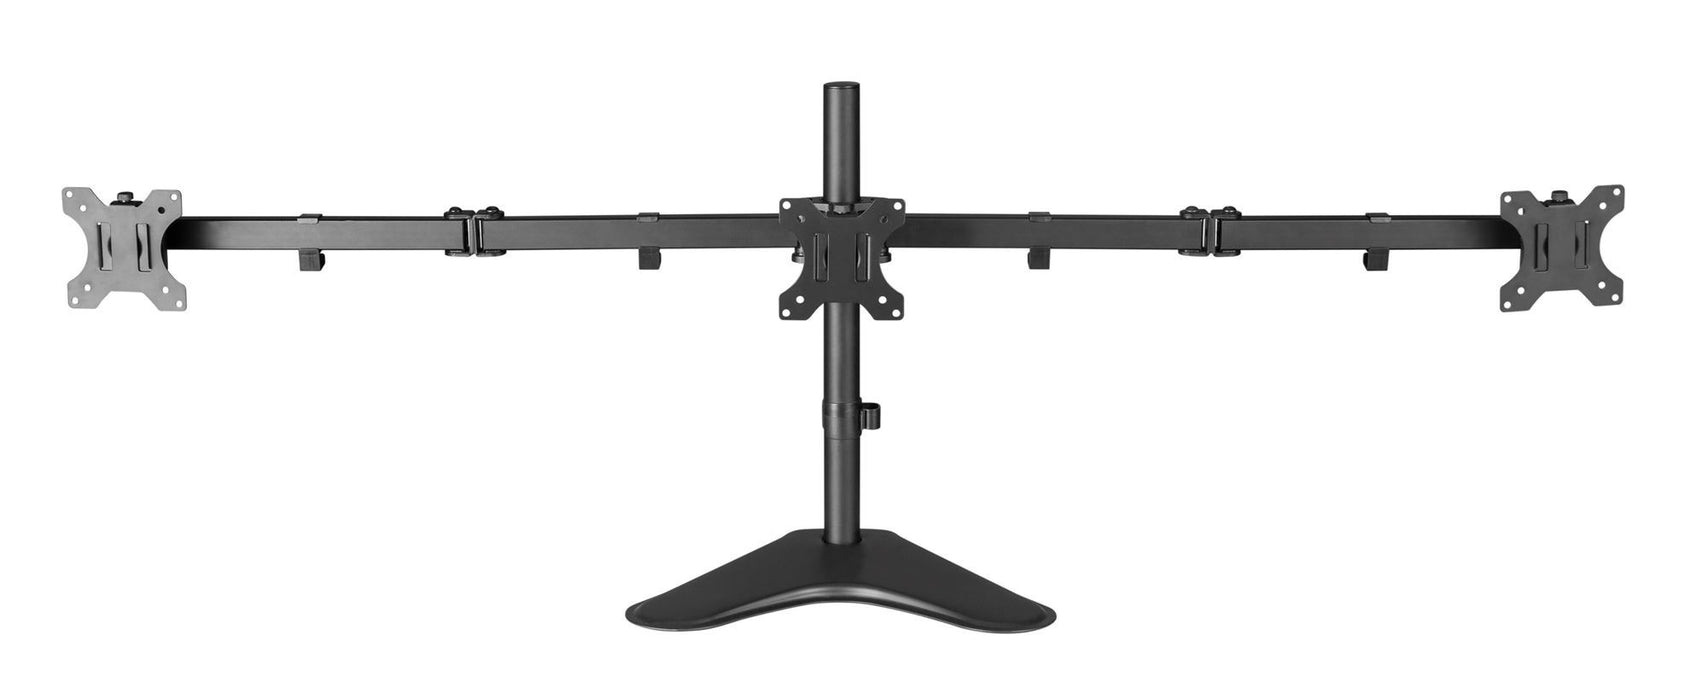 BRATECK 13"-27" Triple Monitor Economy Desk Mount Stand. Detachable VESA Plate,